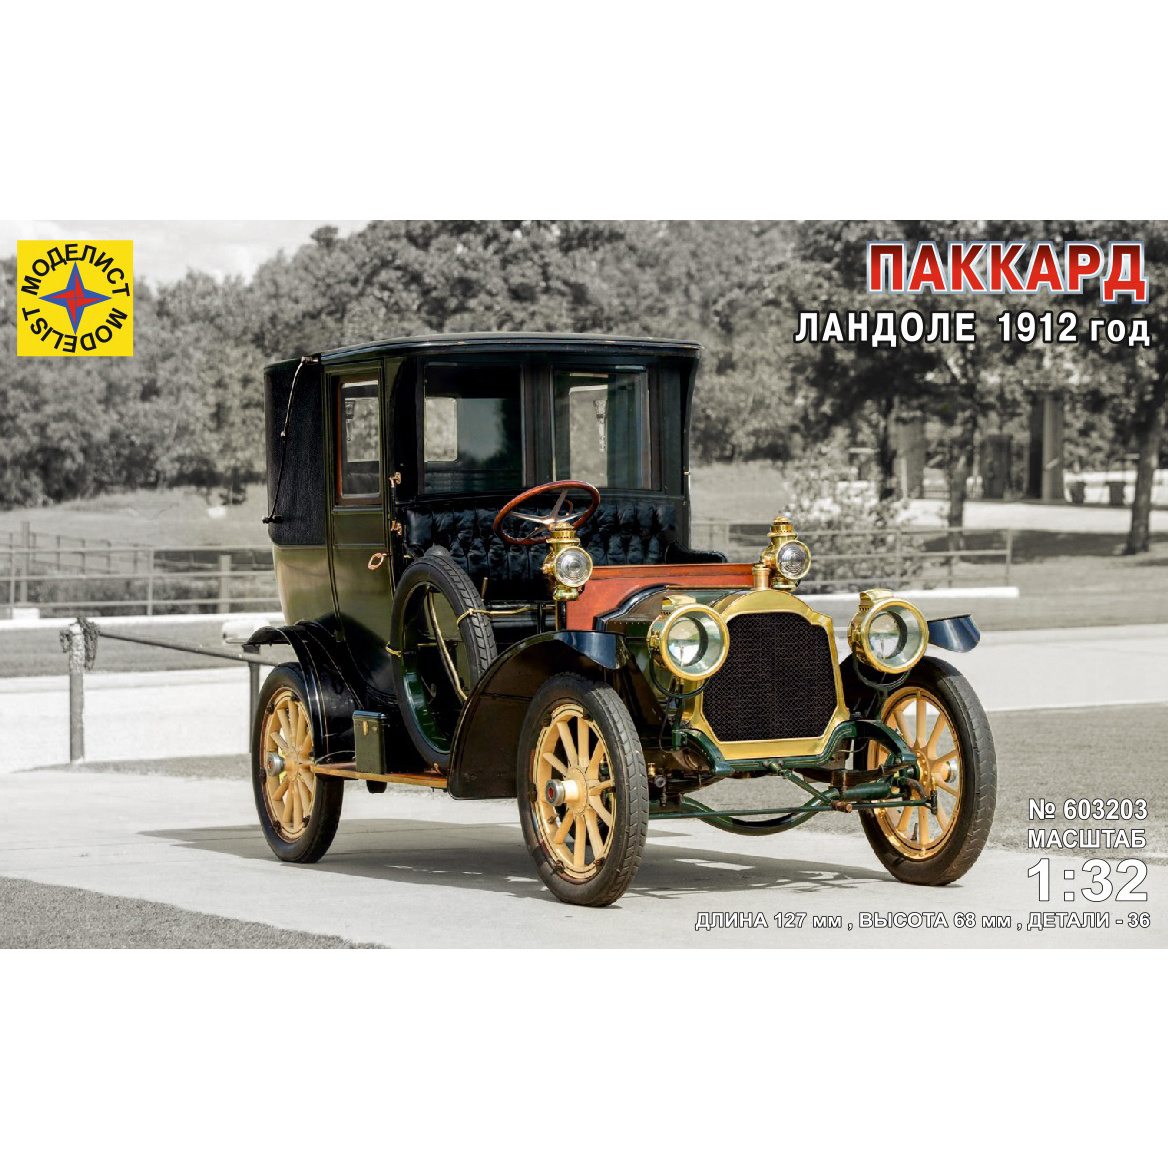 603203 Моделист 1/32 Автомобиль Паккард Ландоле, 1912 год